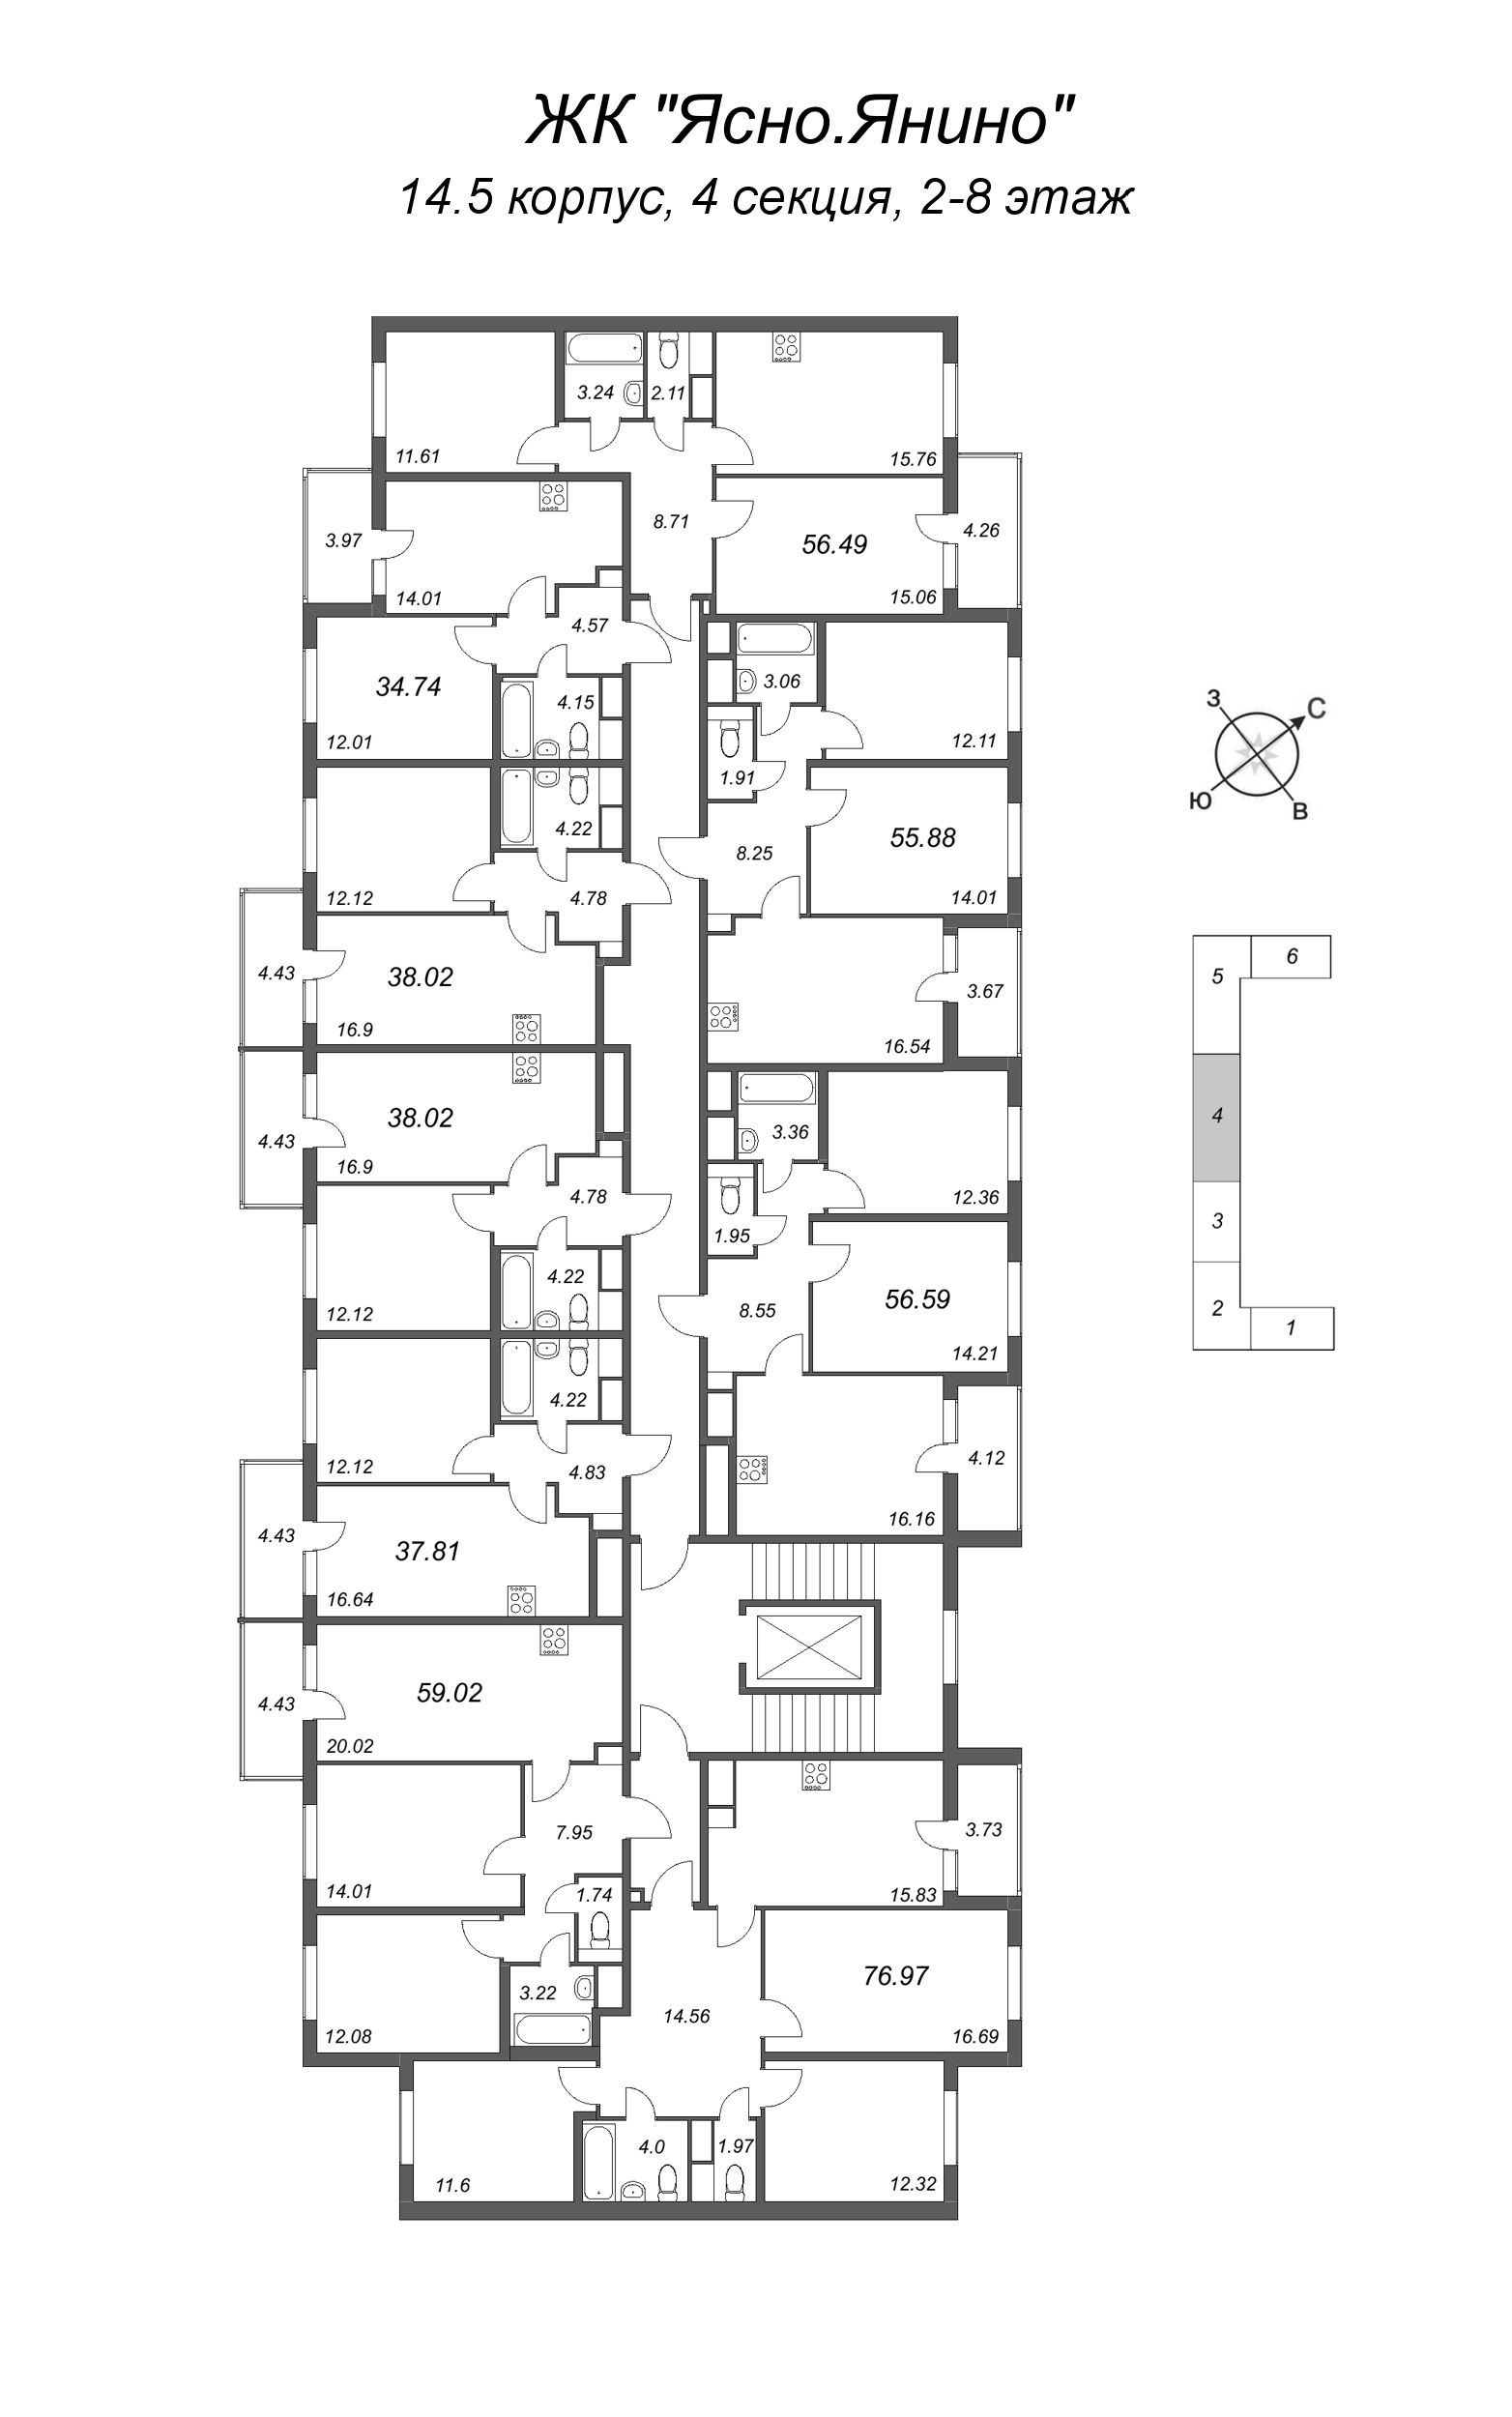 2-комнатная (Евро) квартира, 37.81 м² - планировка этажа